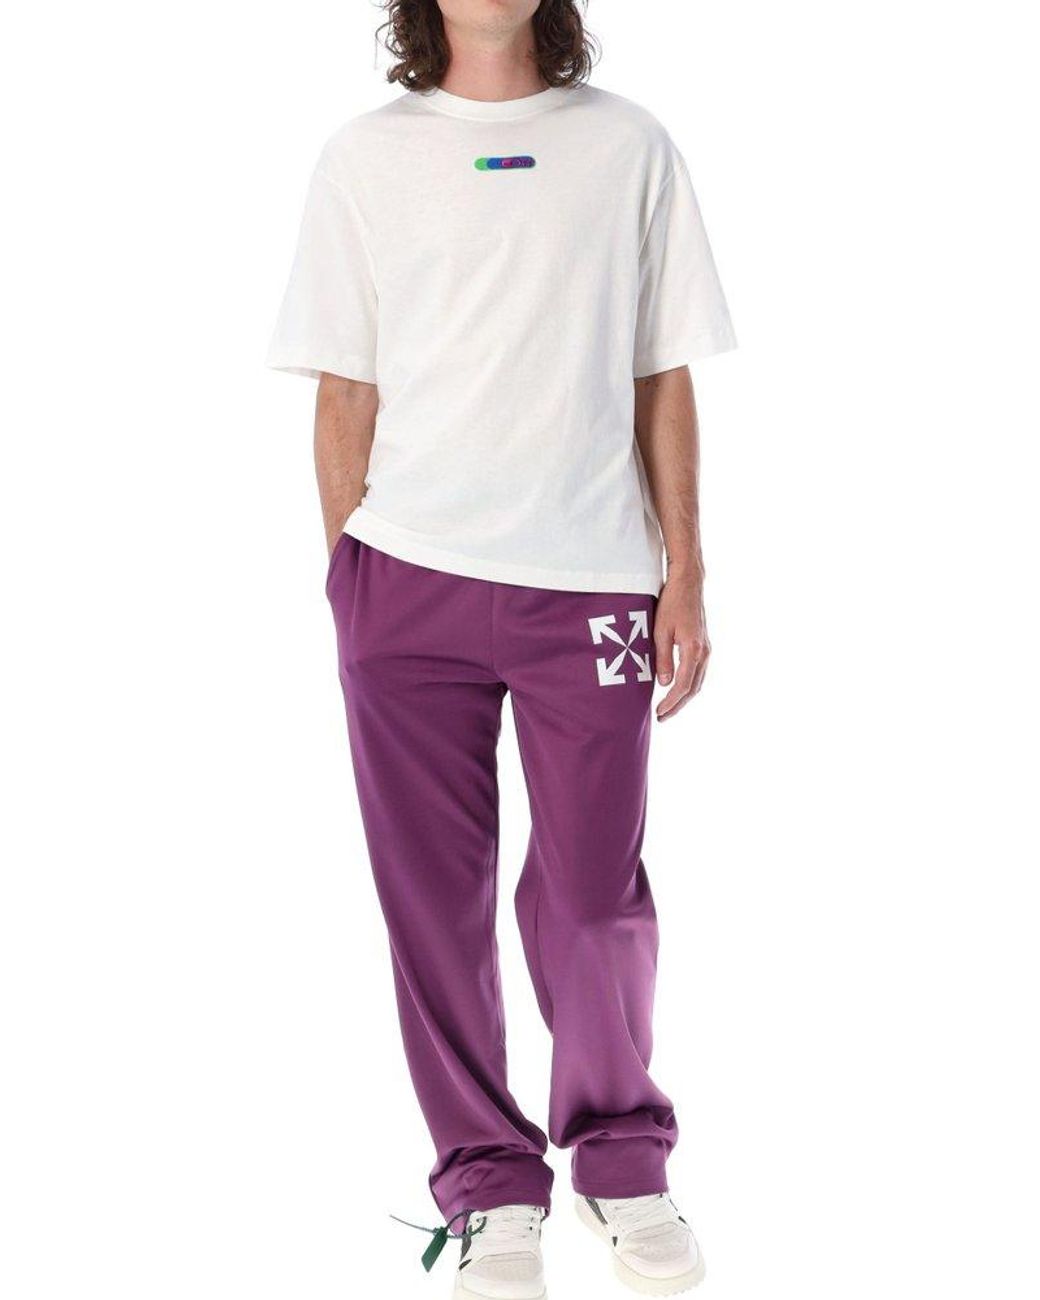 Men's Under Armour Track Pants Purple White Coaching Wind Pants Large